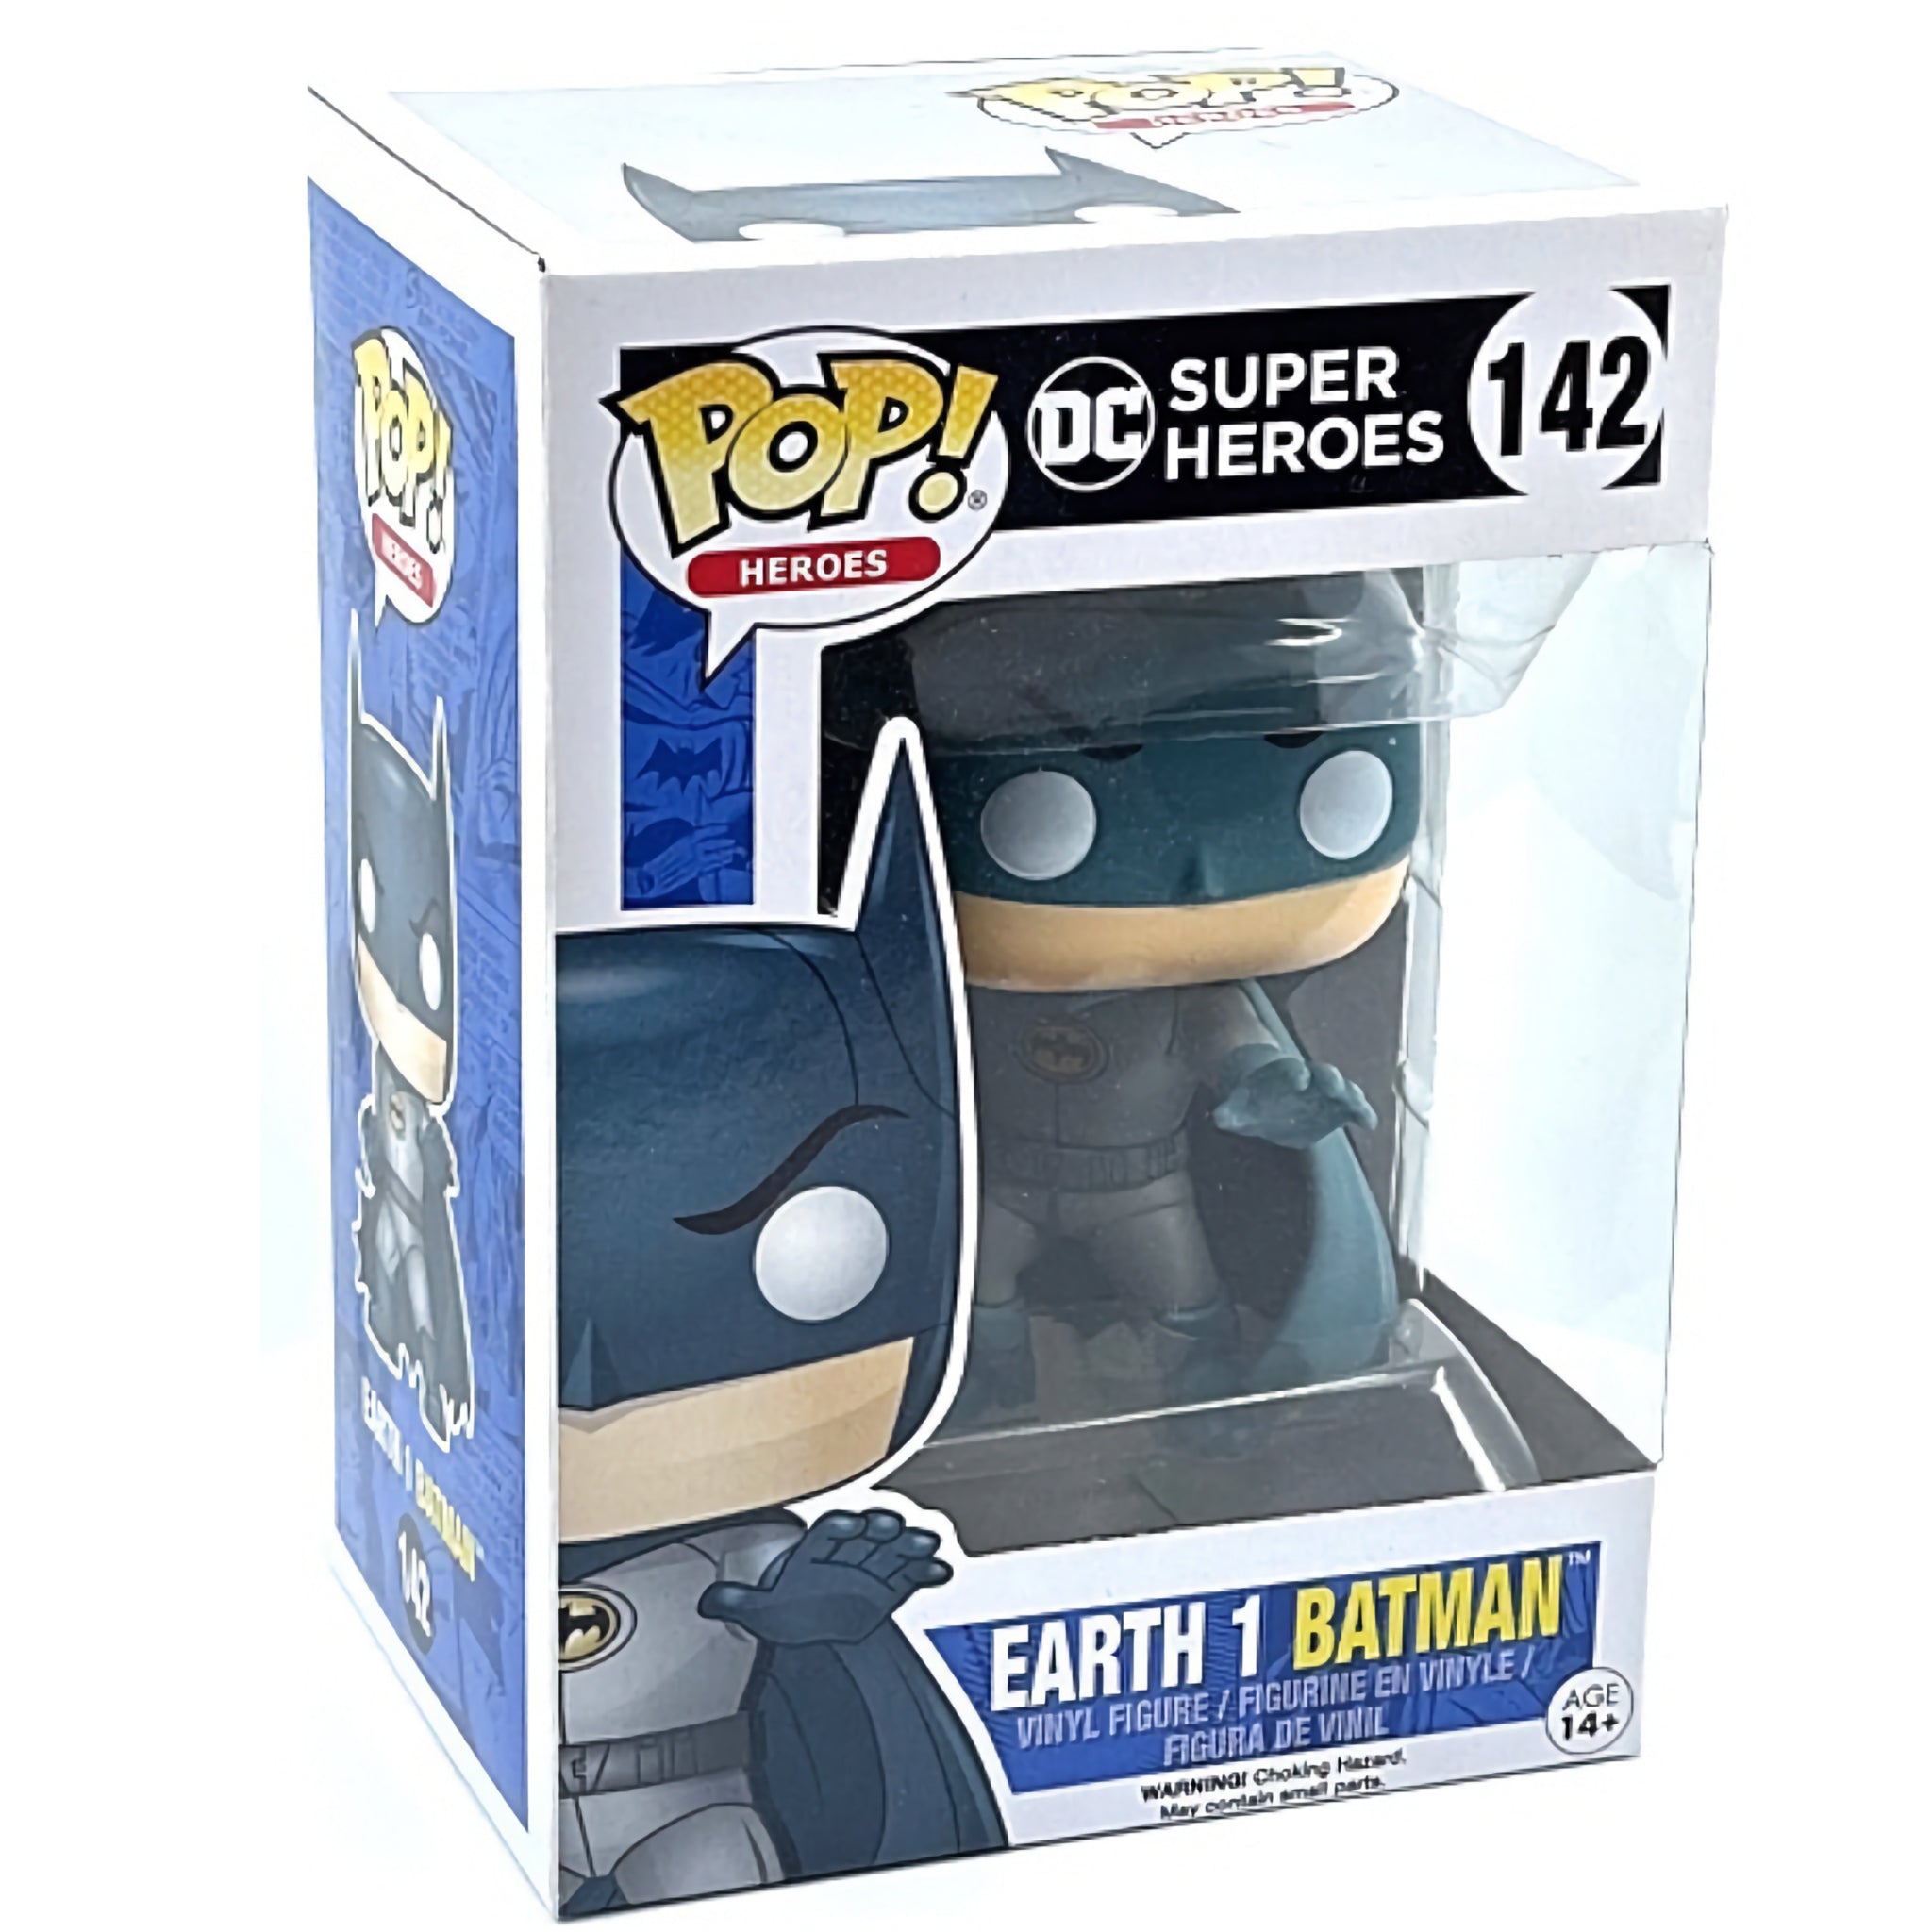 Earth 1 Batman Funko Pop!